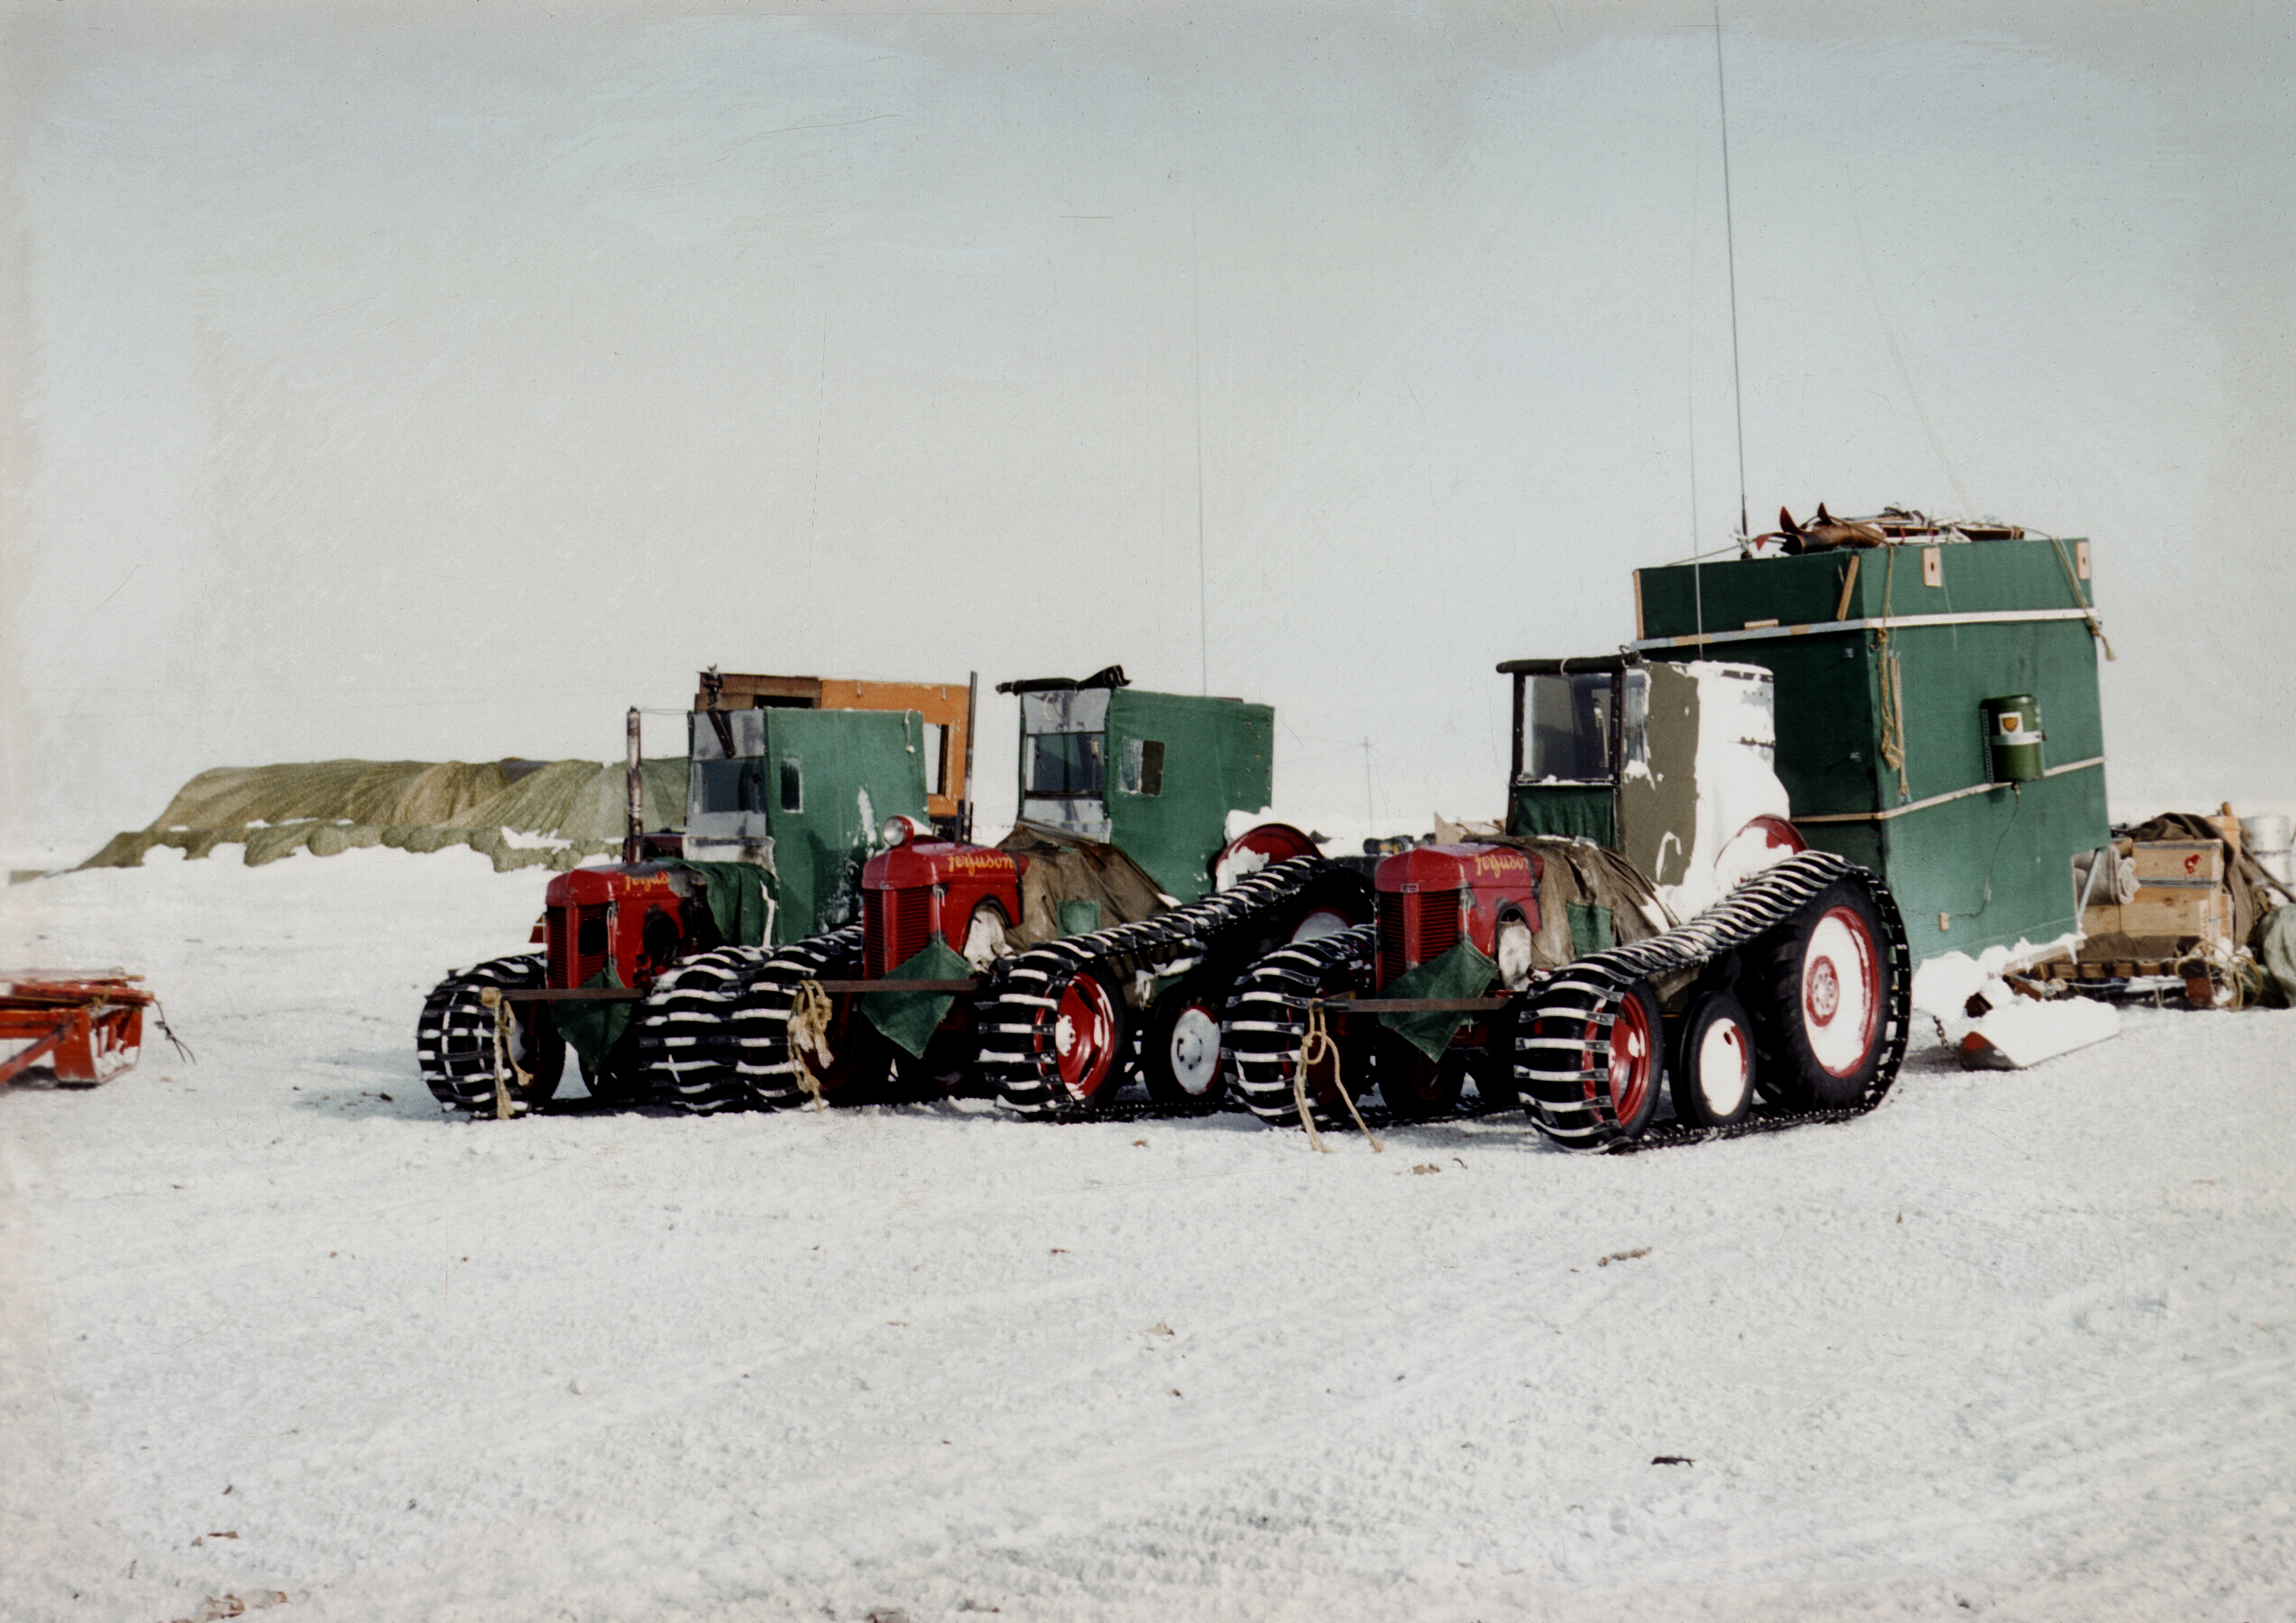 Three Massey Ferguson tractors parked on snowy terrain.